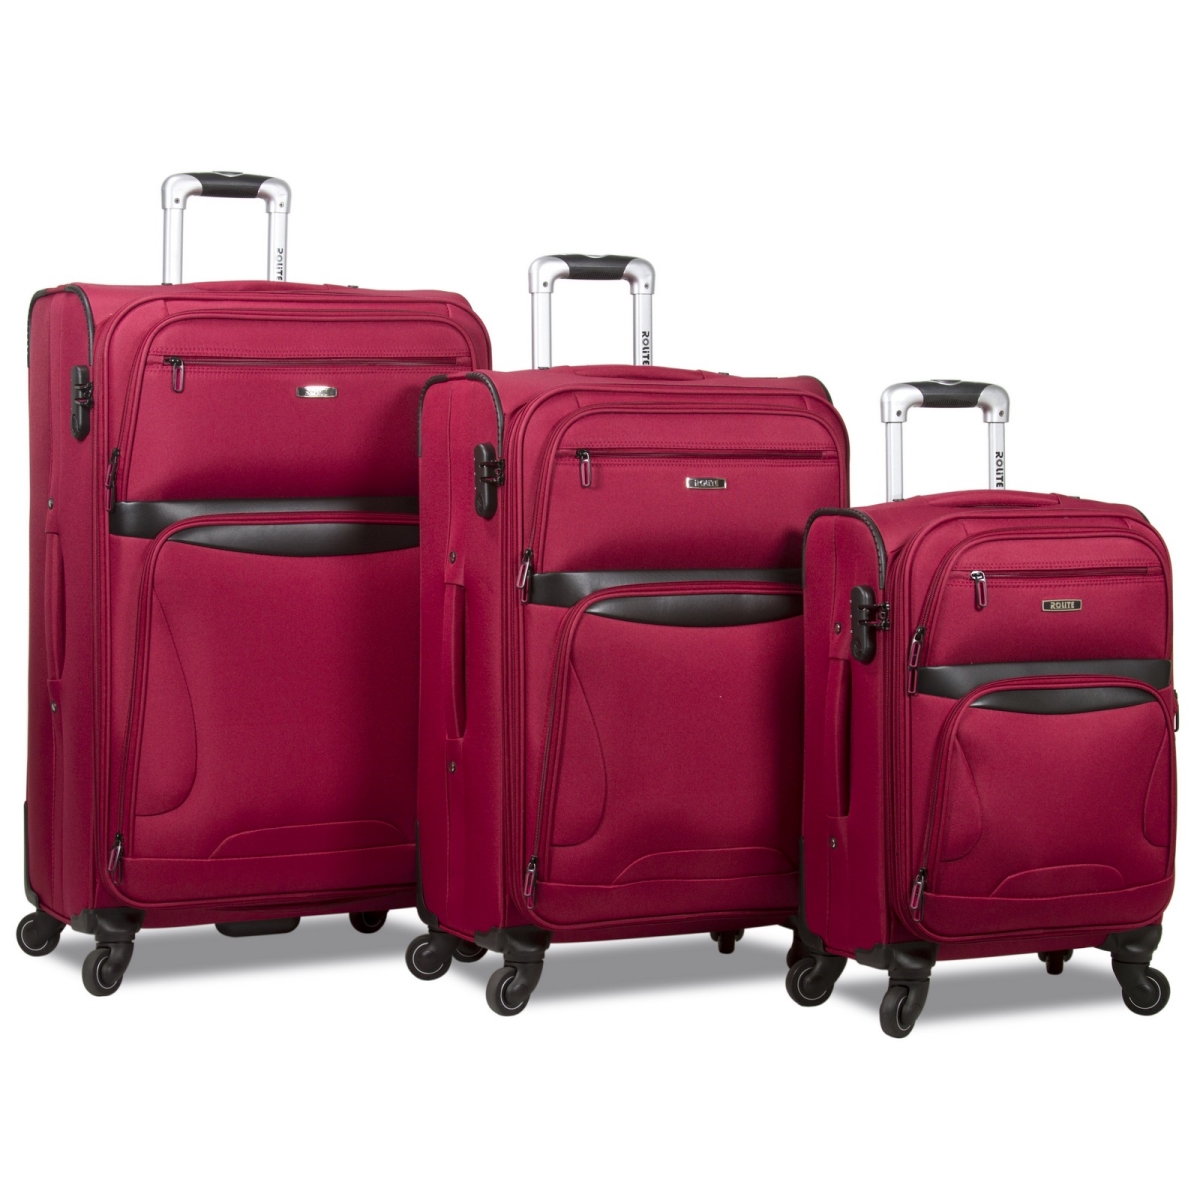 25rl-105-burgundy Explorer Expandable Spinner Luggage Set - Burgundy, 3 Piece